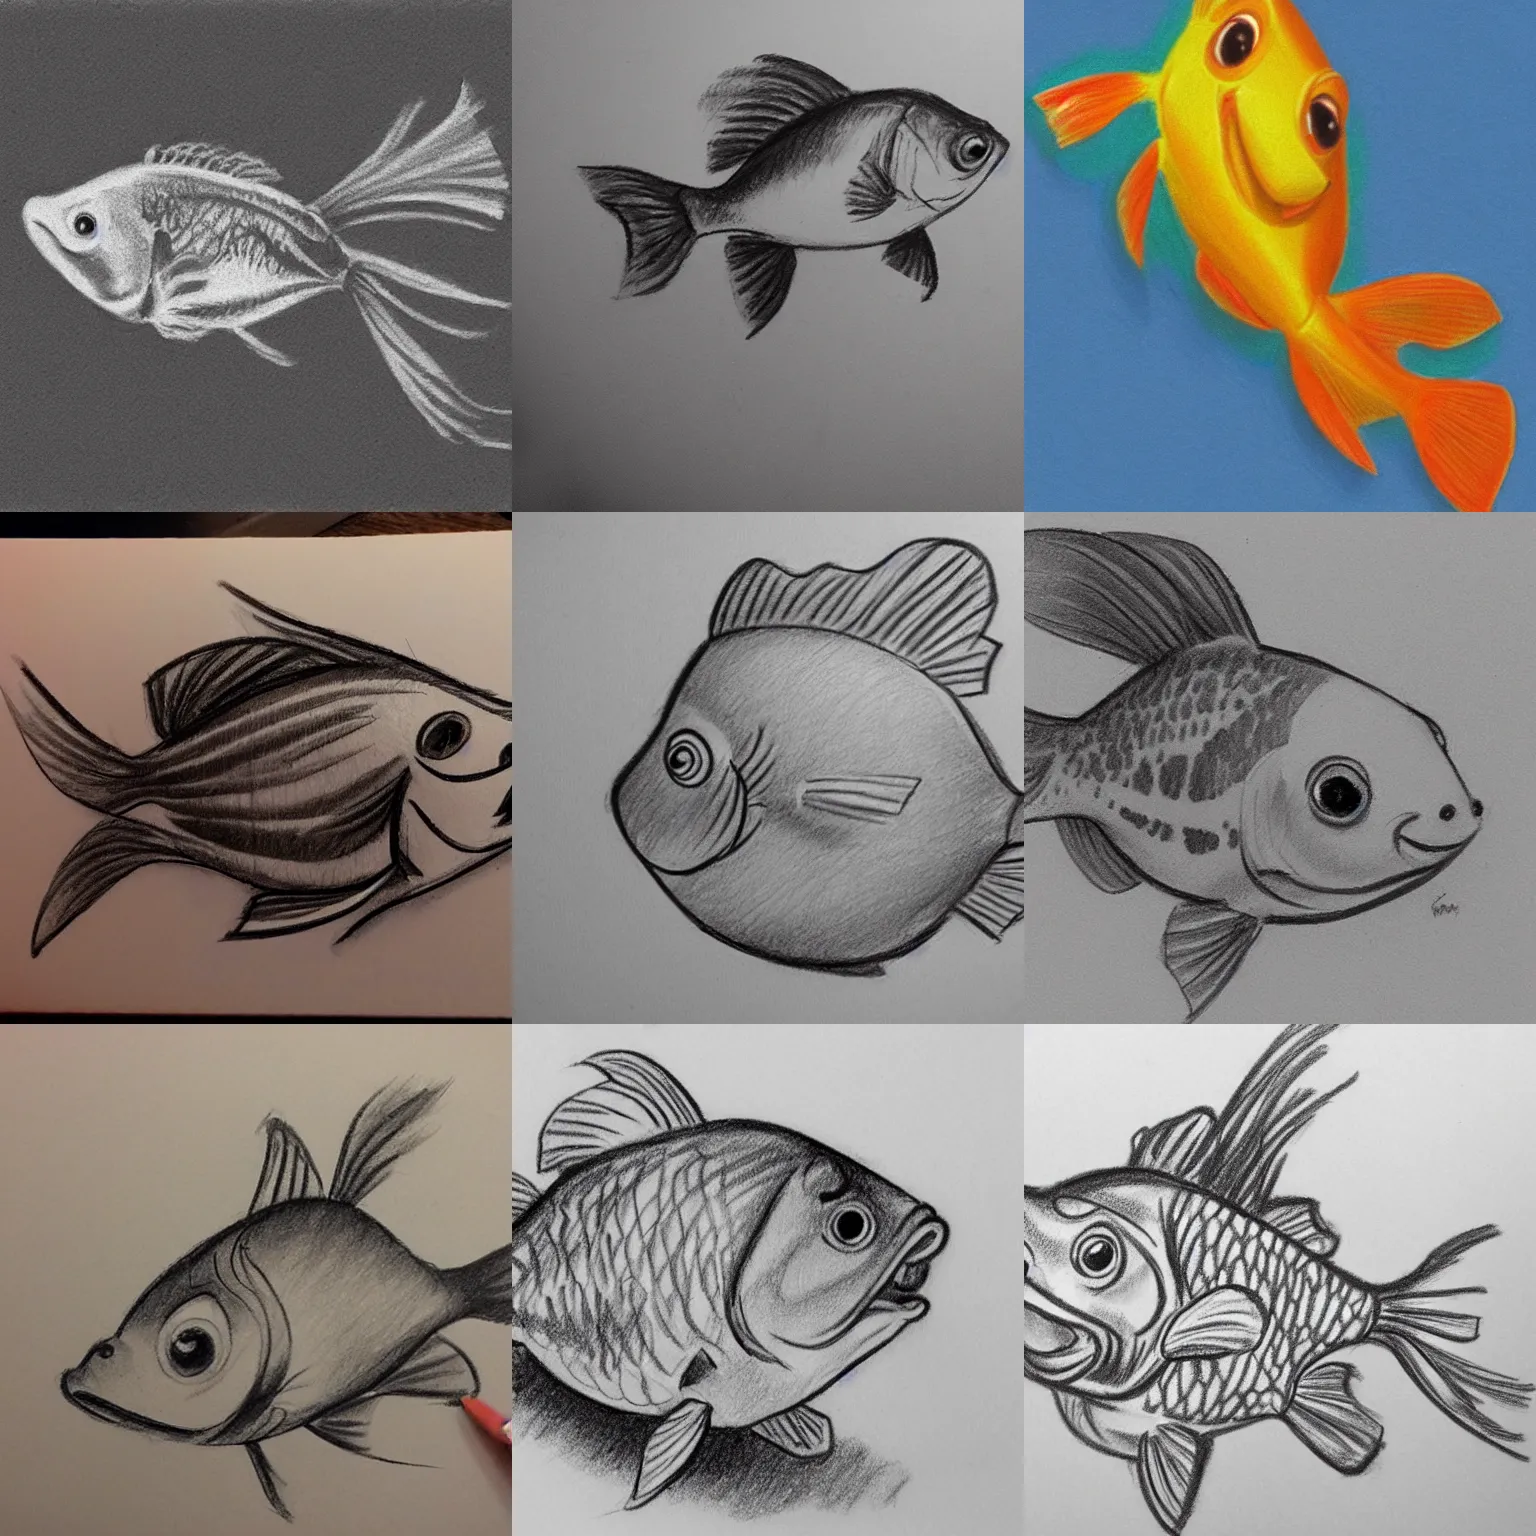 Prompt: disney pencil sketch of a goldfish